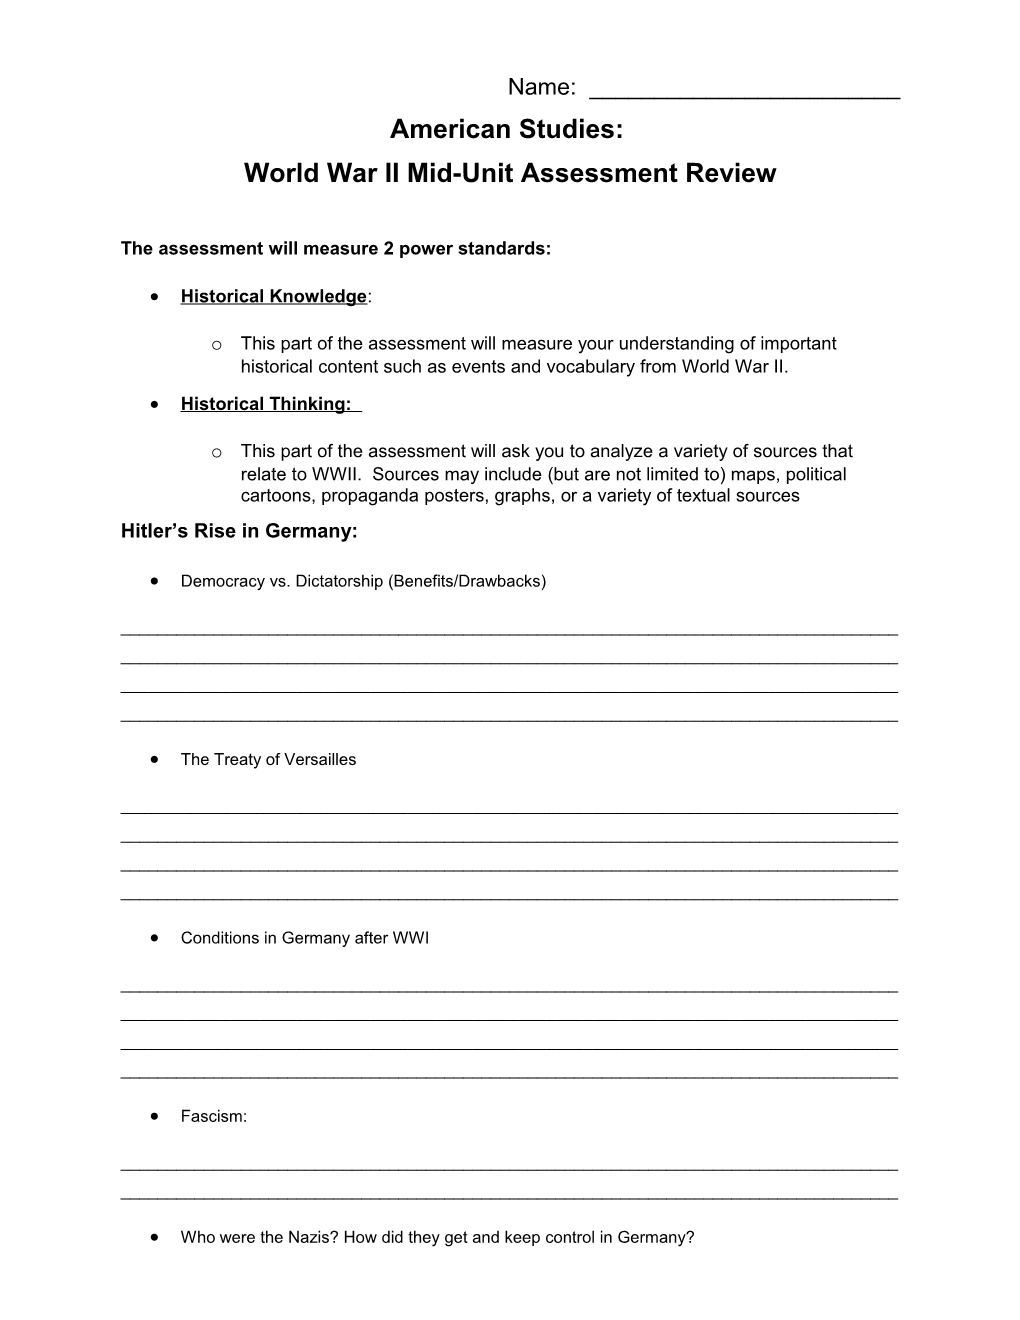 World War II Mid-Unit Assessment Review